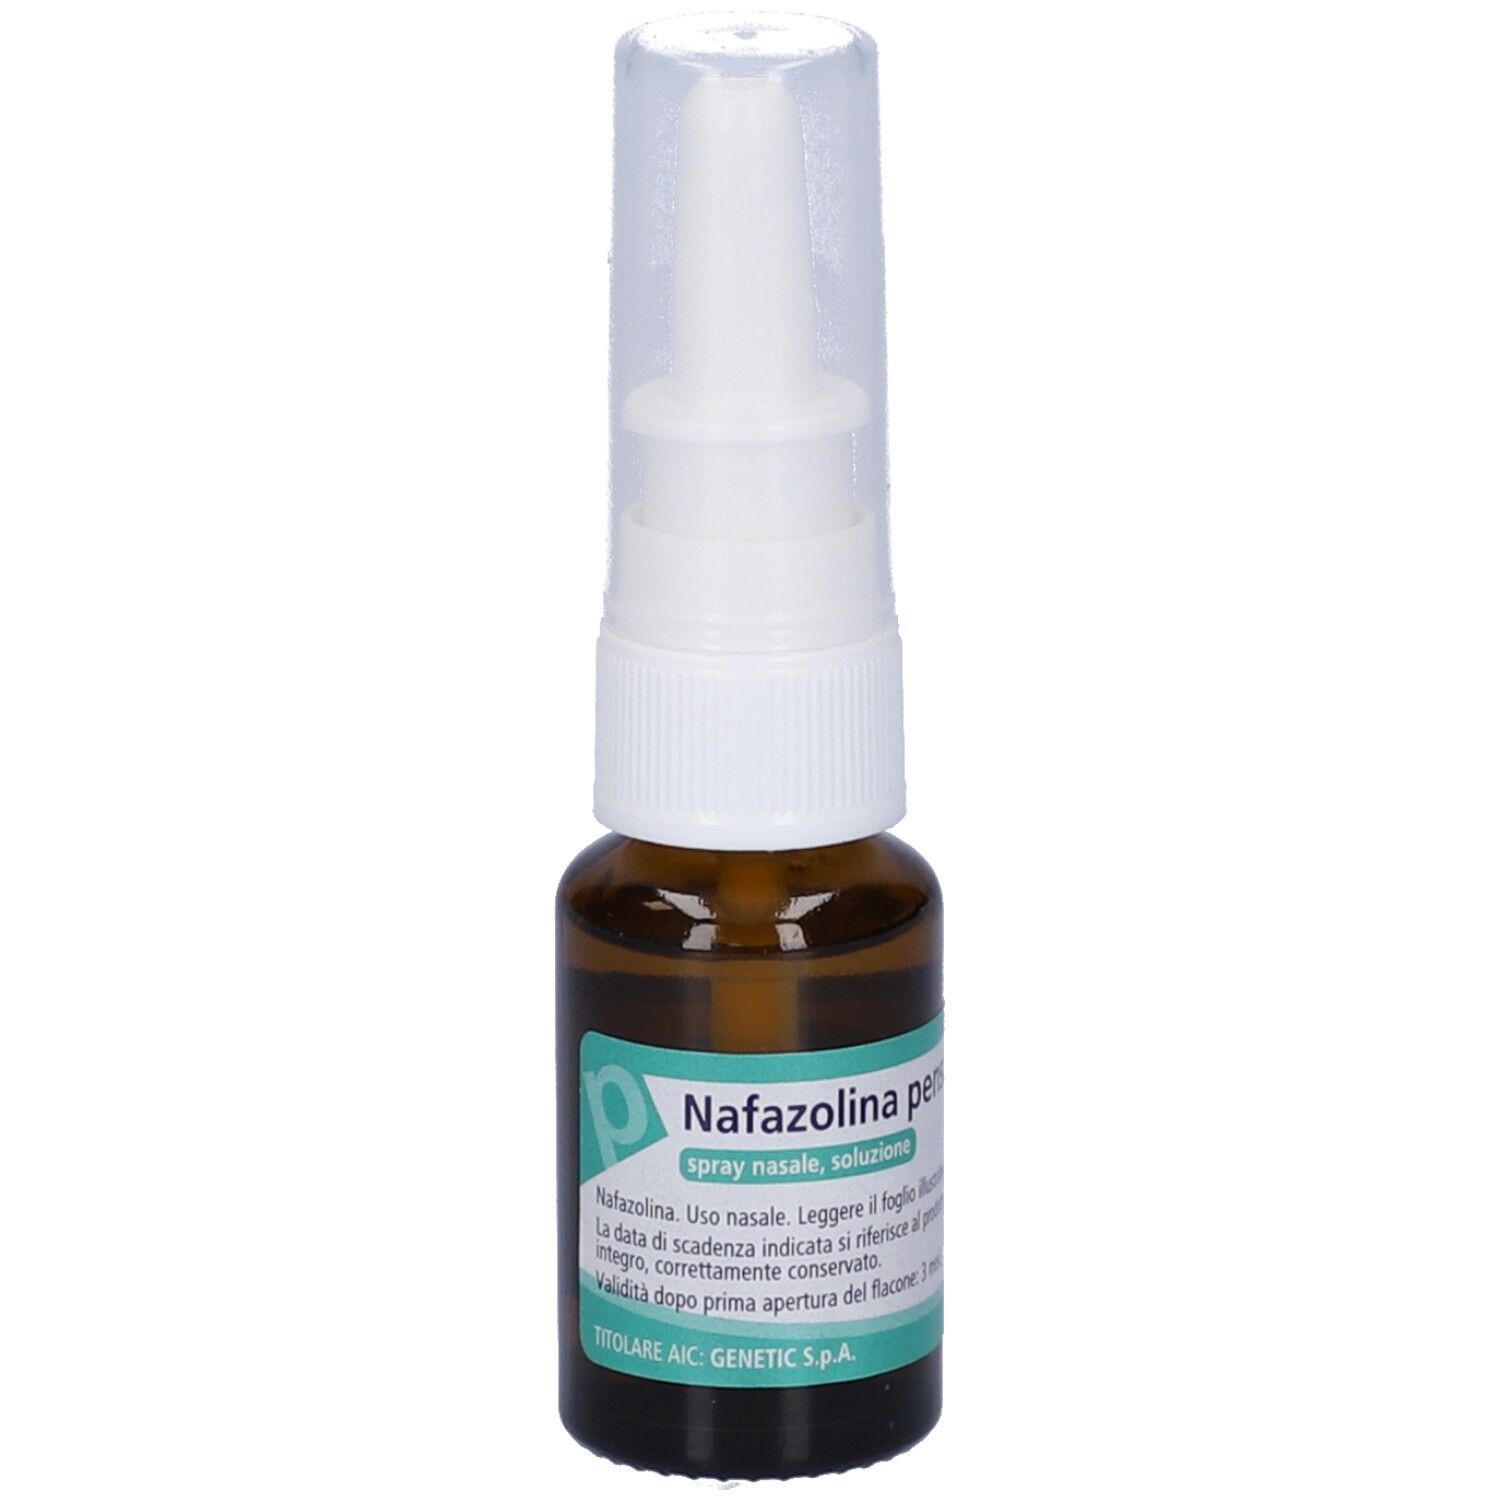 Nafazolina Pensa 100 mg/100 ml spray nasale